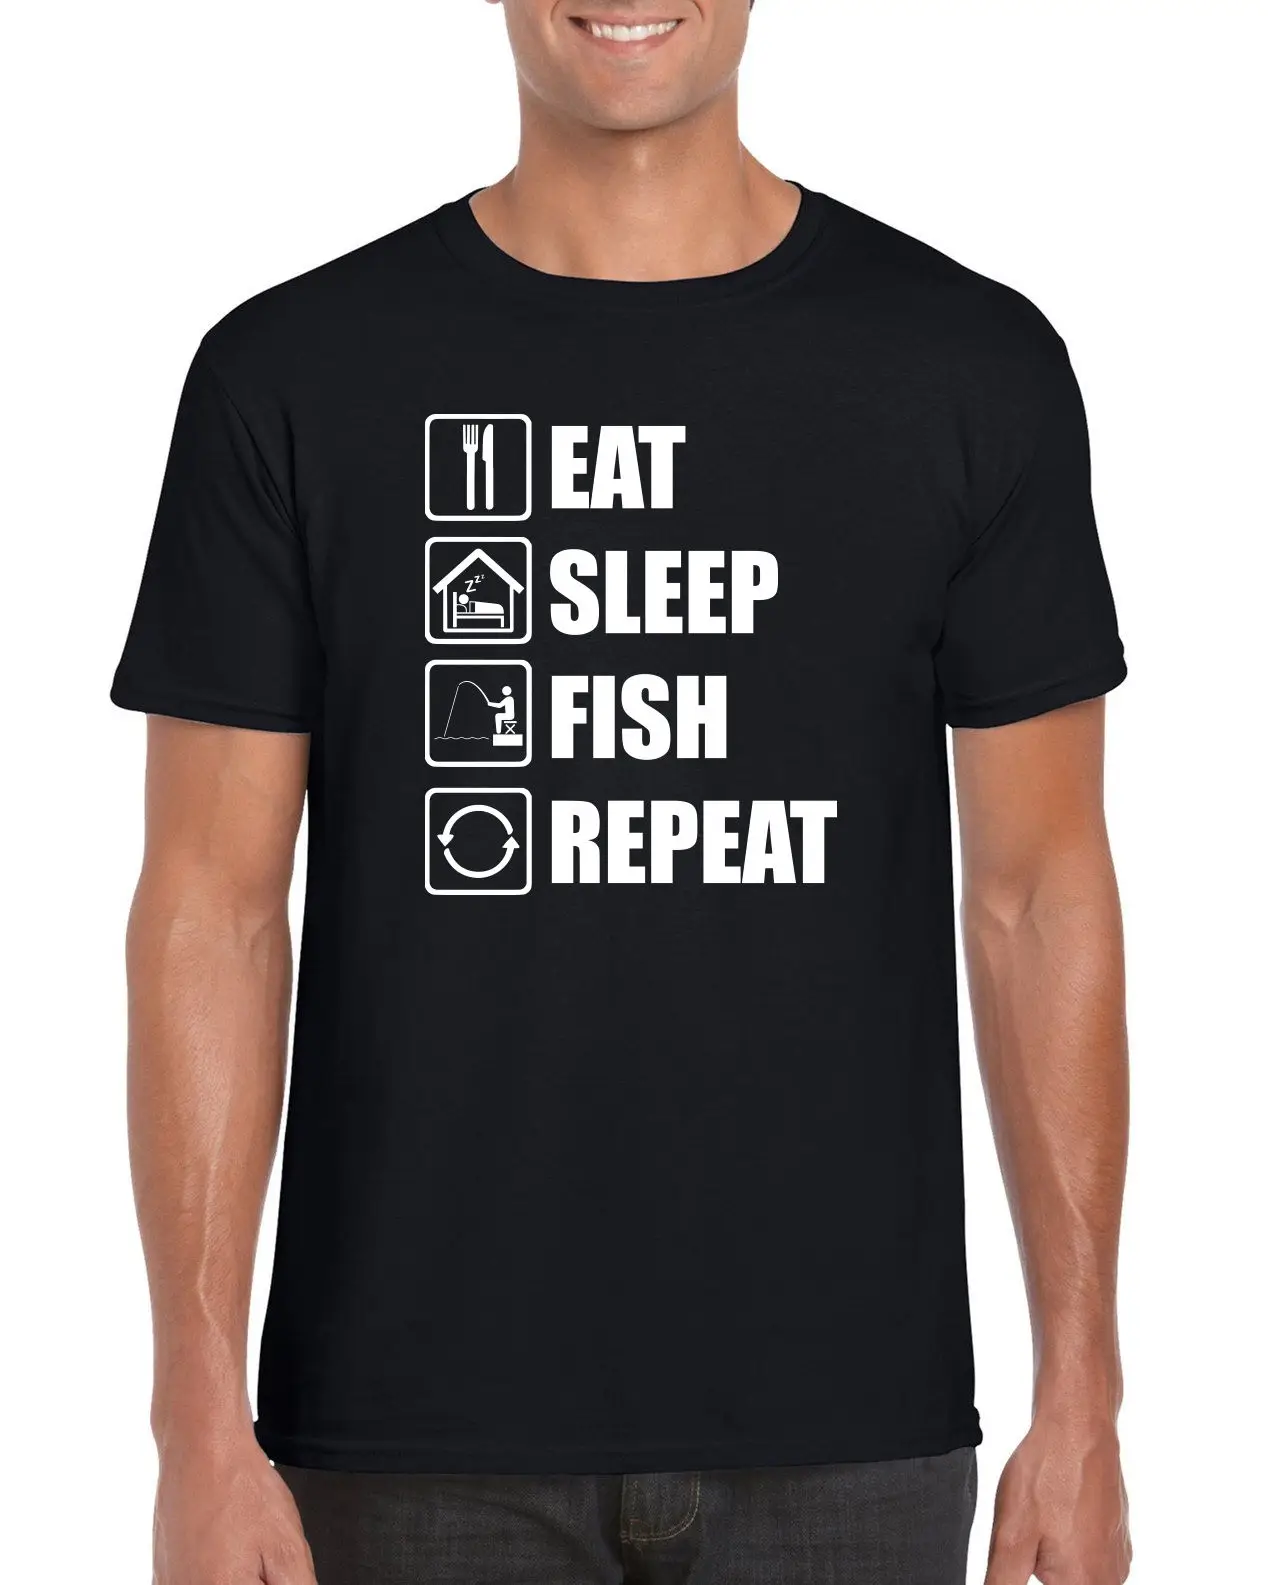 "Eat Sleep Fish Repeat" забавная футболка для рыбалки Новые футболки arrival повседневная Летняя Распродажа дешевых футболок